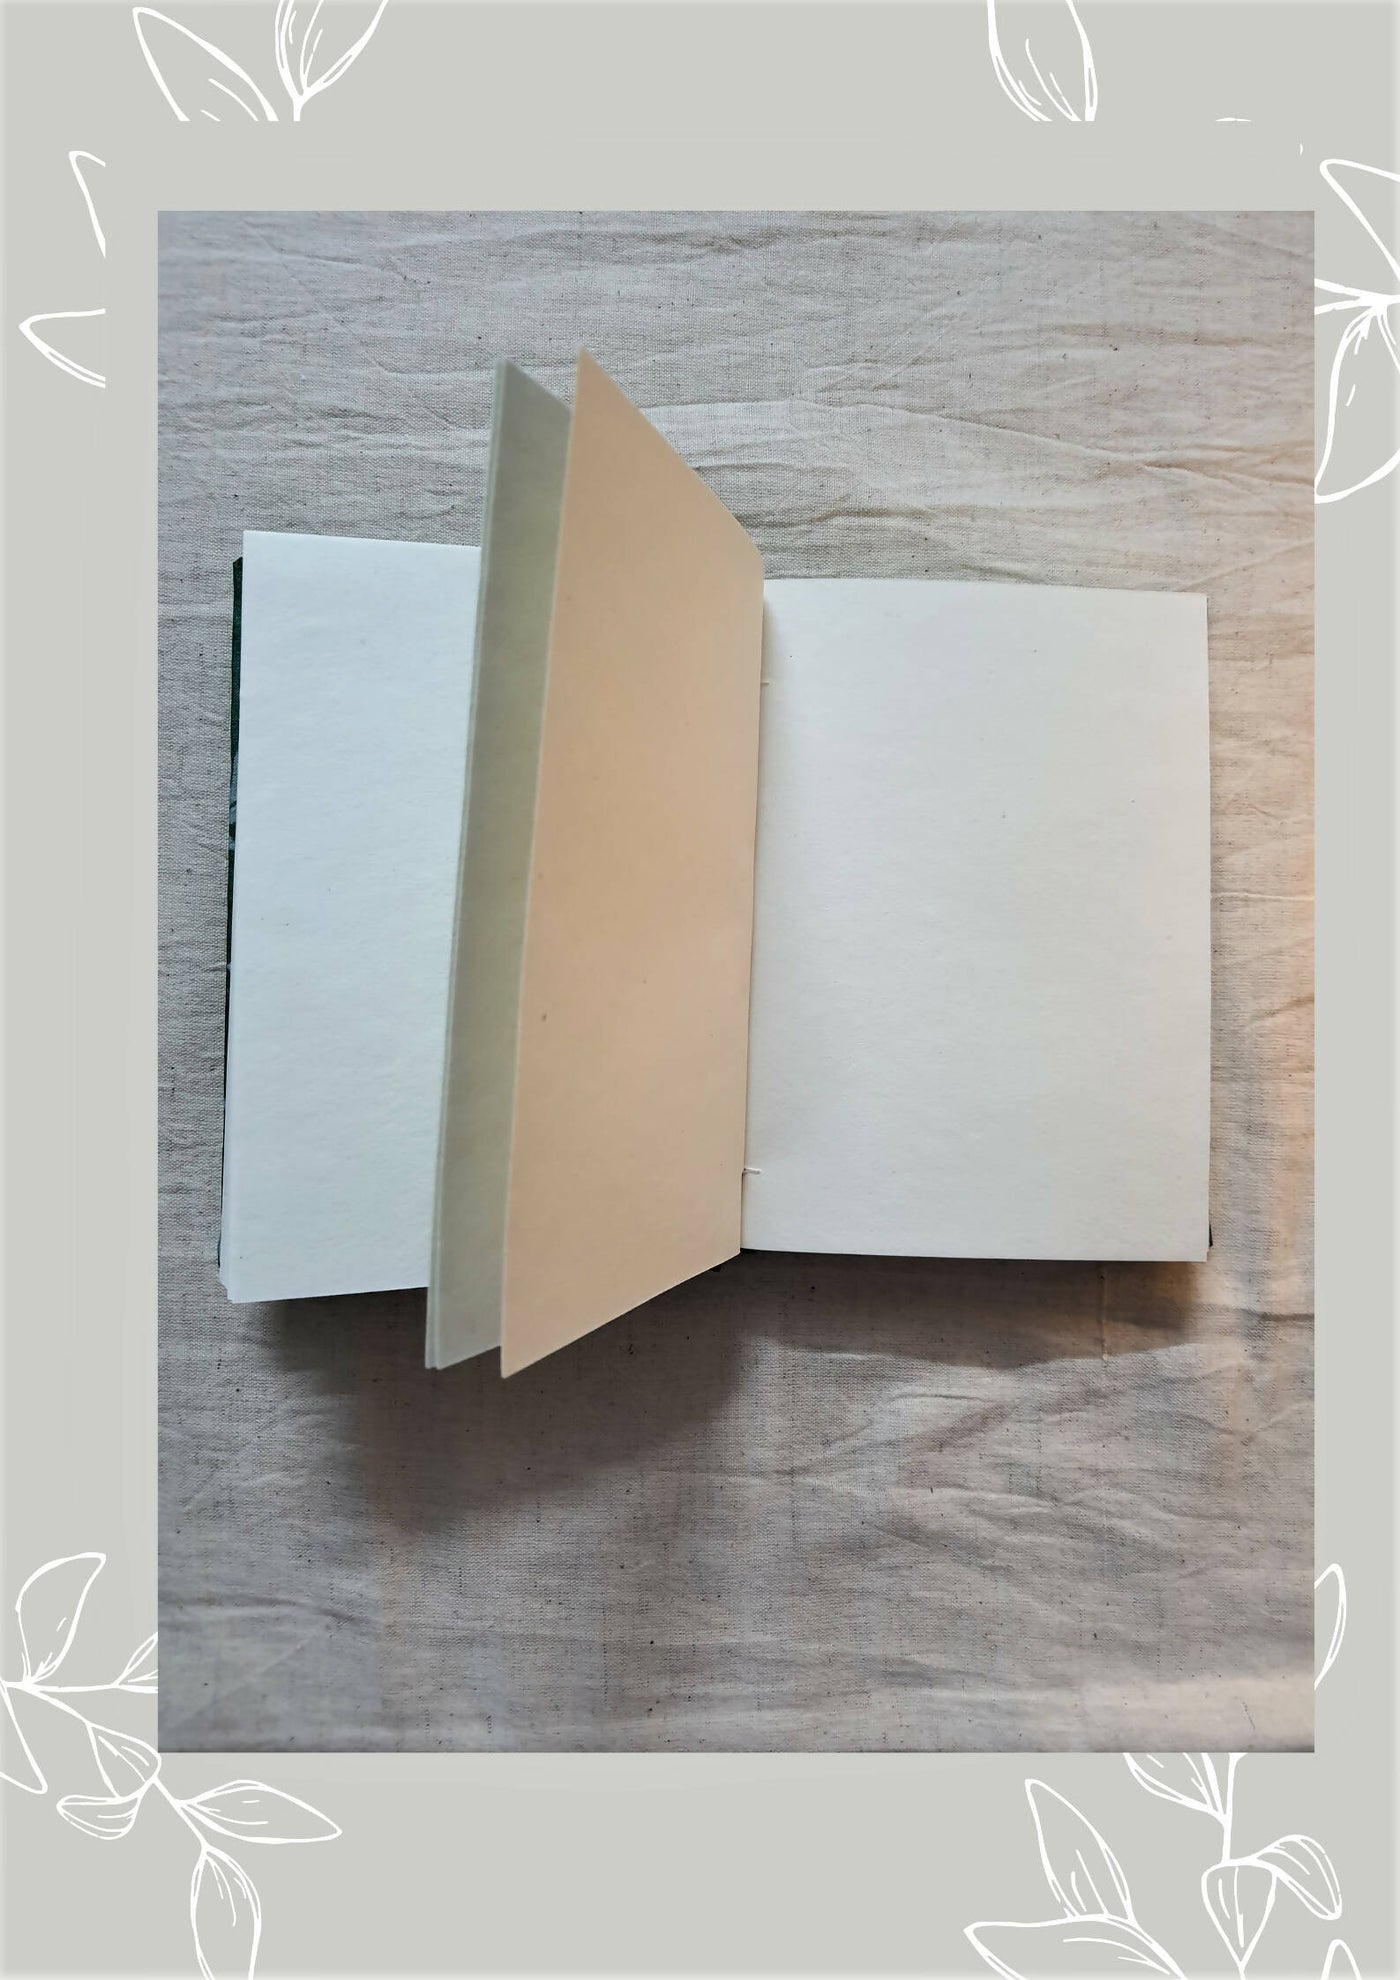 Jamun - Upcycled Handloom Fabric Journal